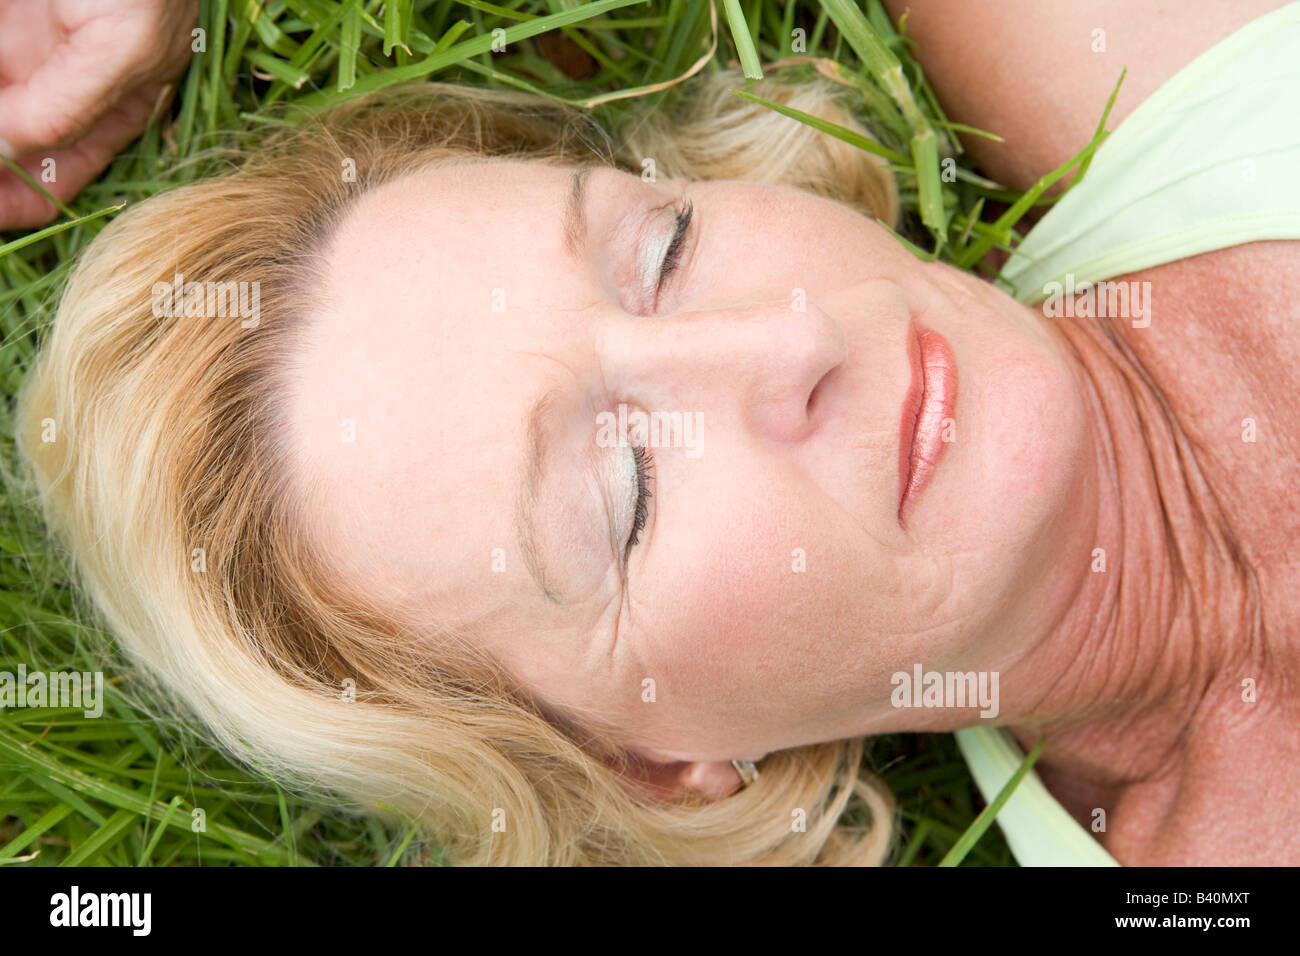 Спящую зрелую тетю. Взрослая женщина лежит на траве. Пожилая женщина лежит на траве. Взрослые женщины лежа.